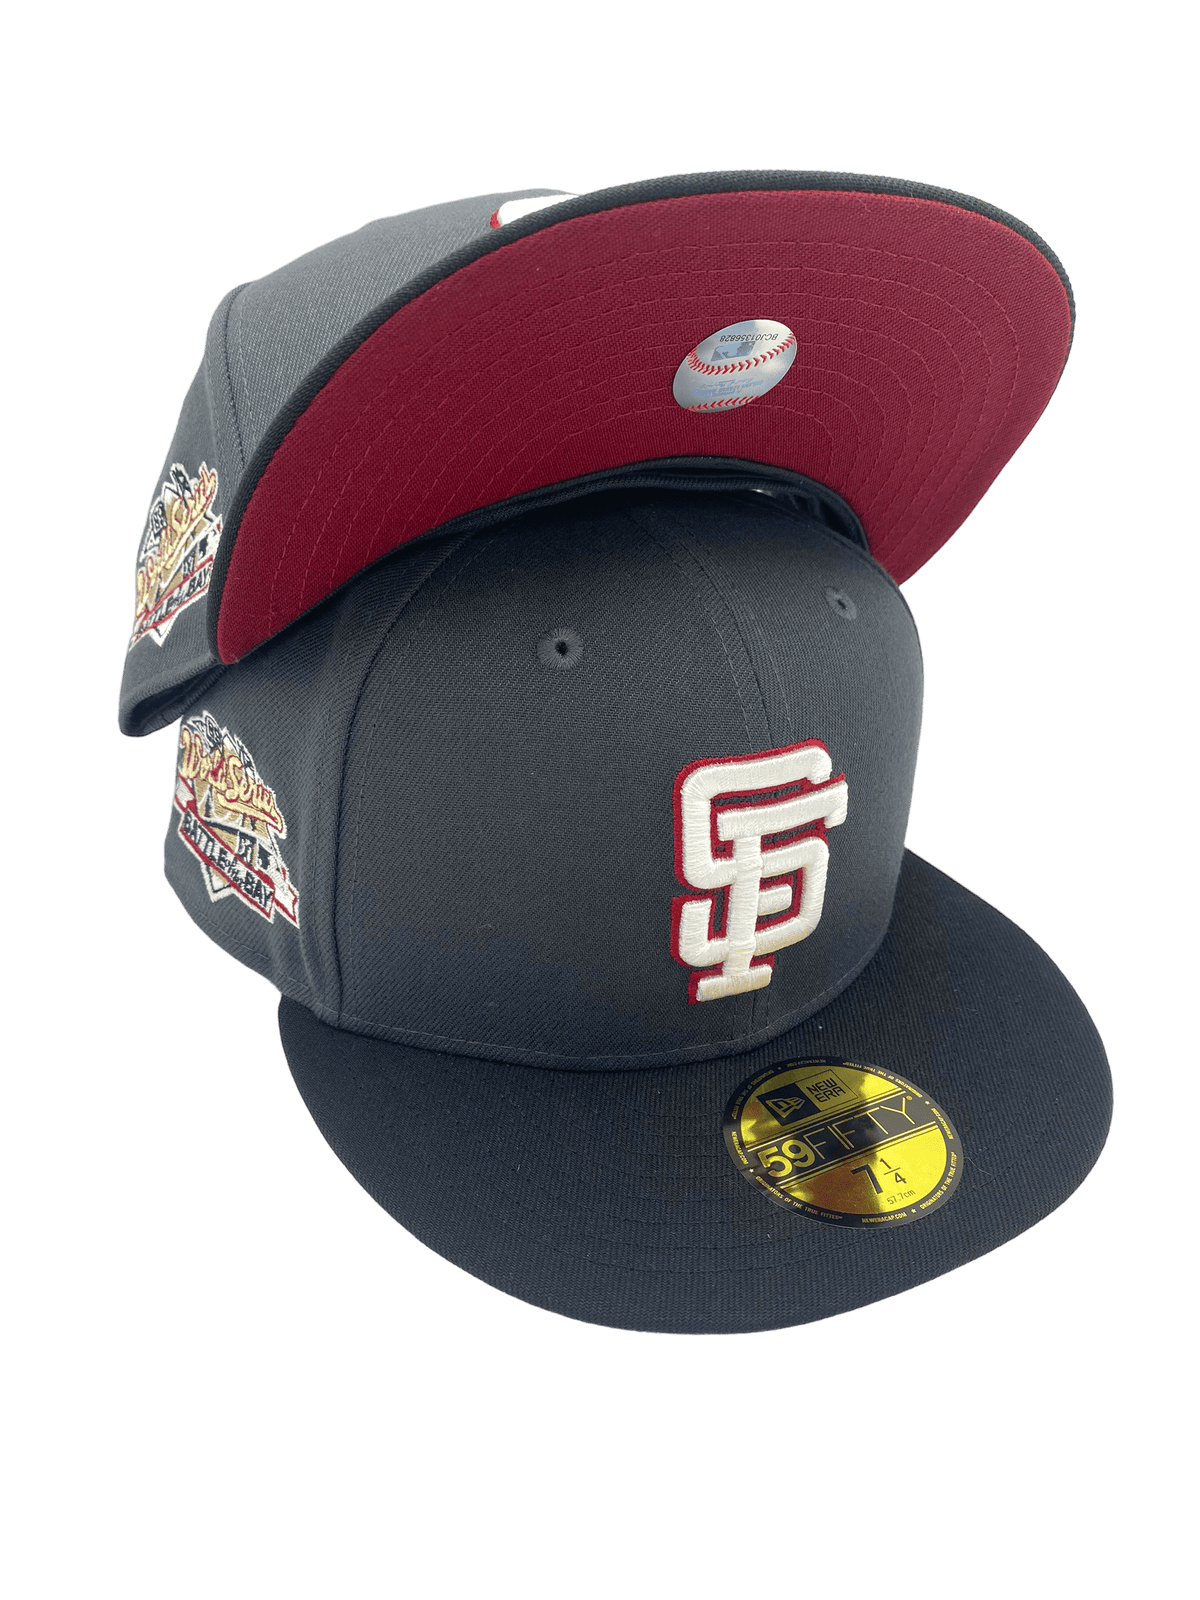  New Era 59Fifty Hat MLB Basic San Francisco Giants